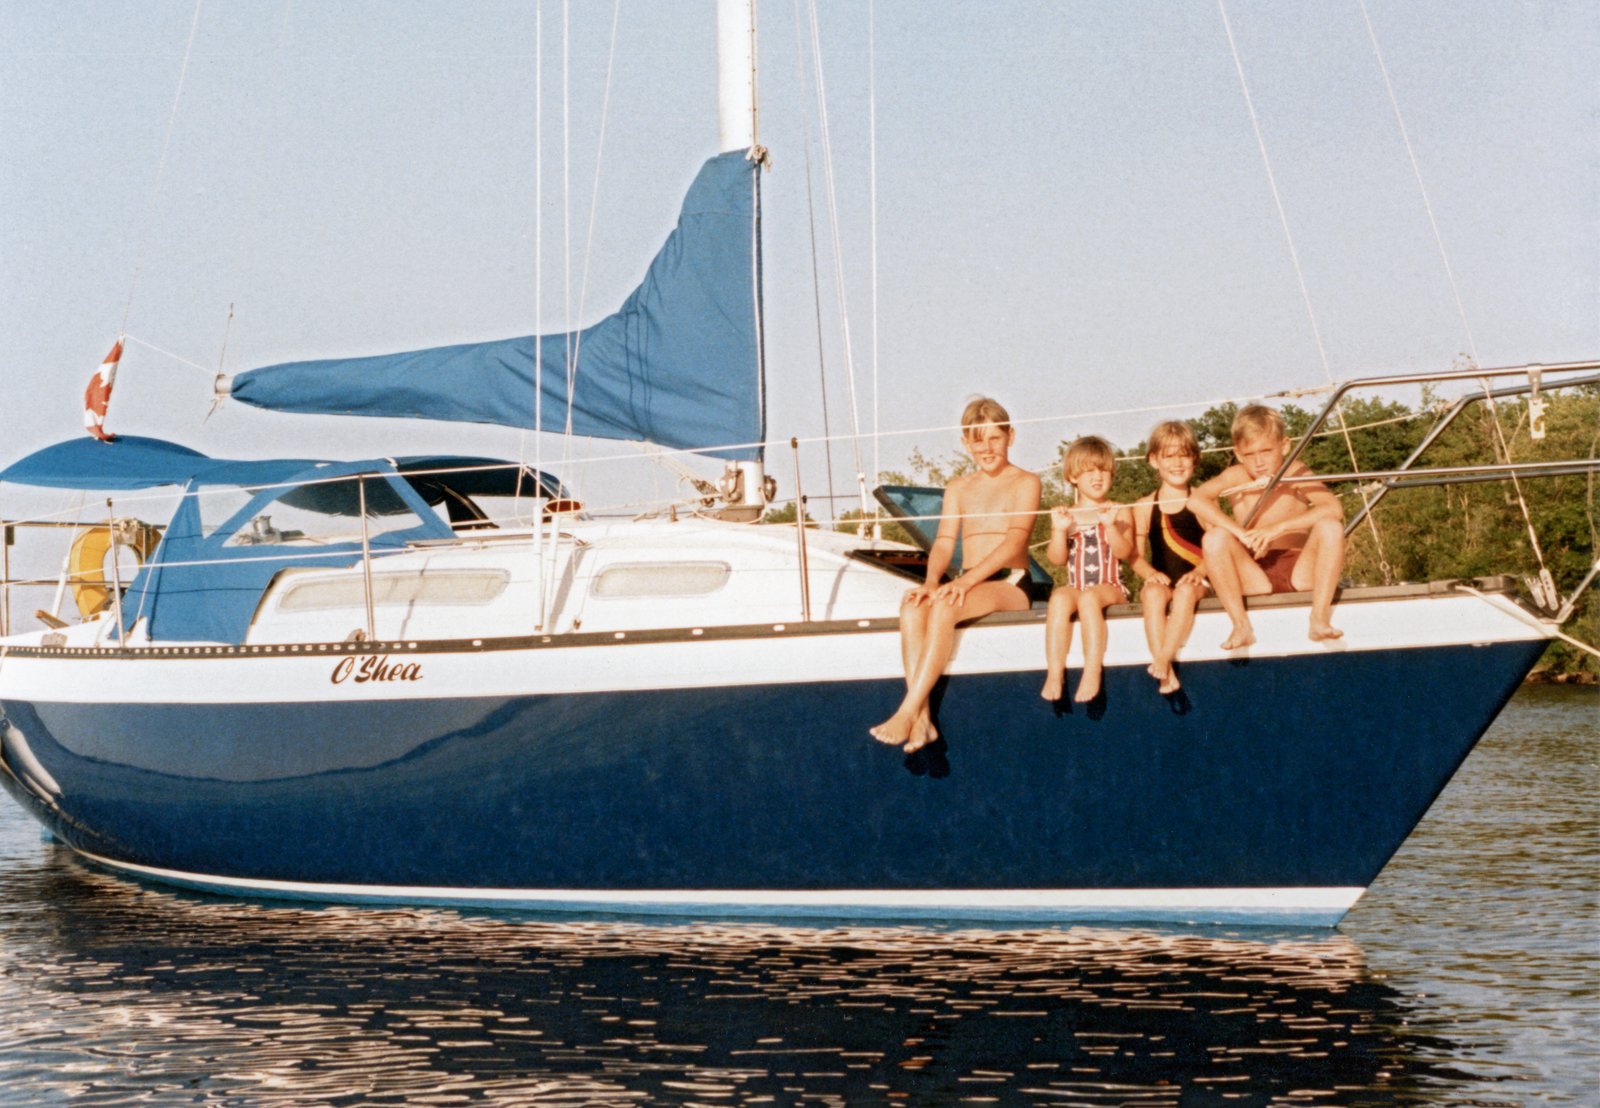 The Shea siblings on their family’s O’Shea sailboat, Ontario, circa 1984.